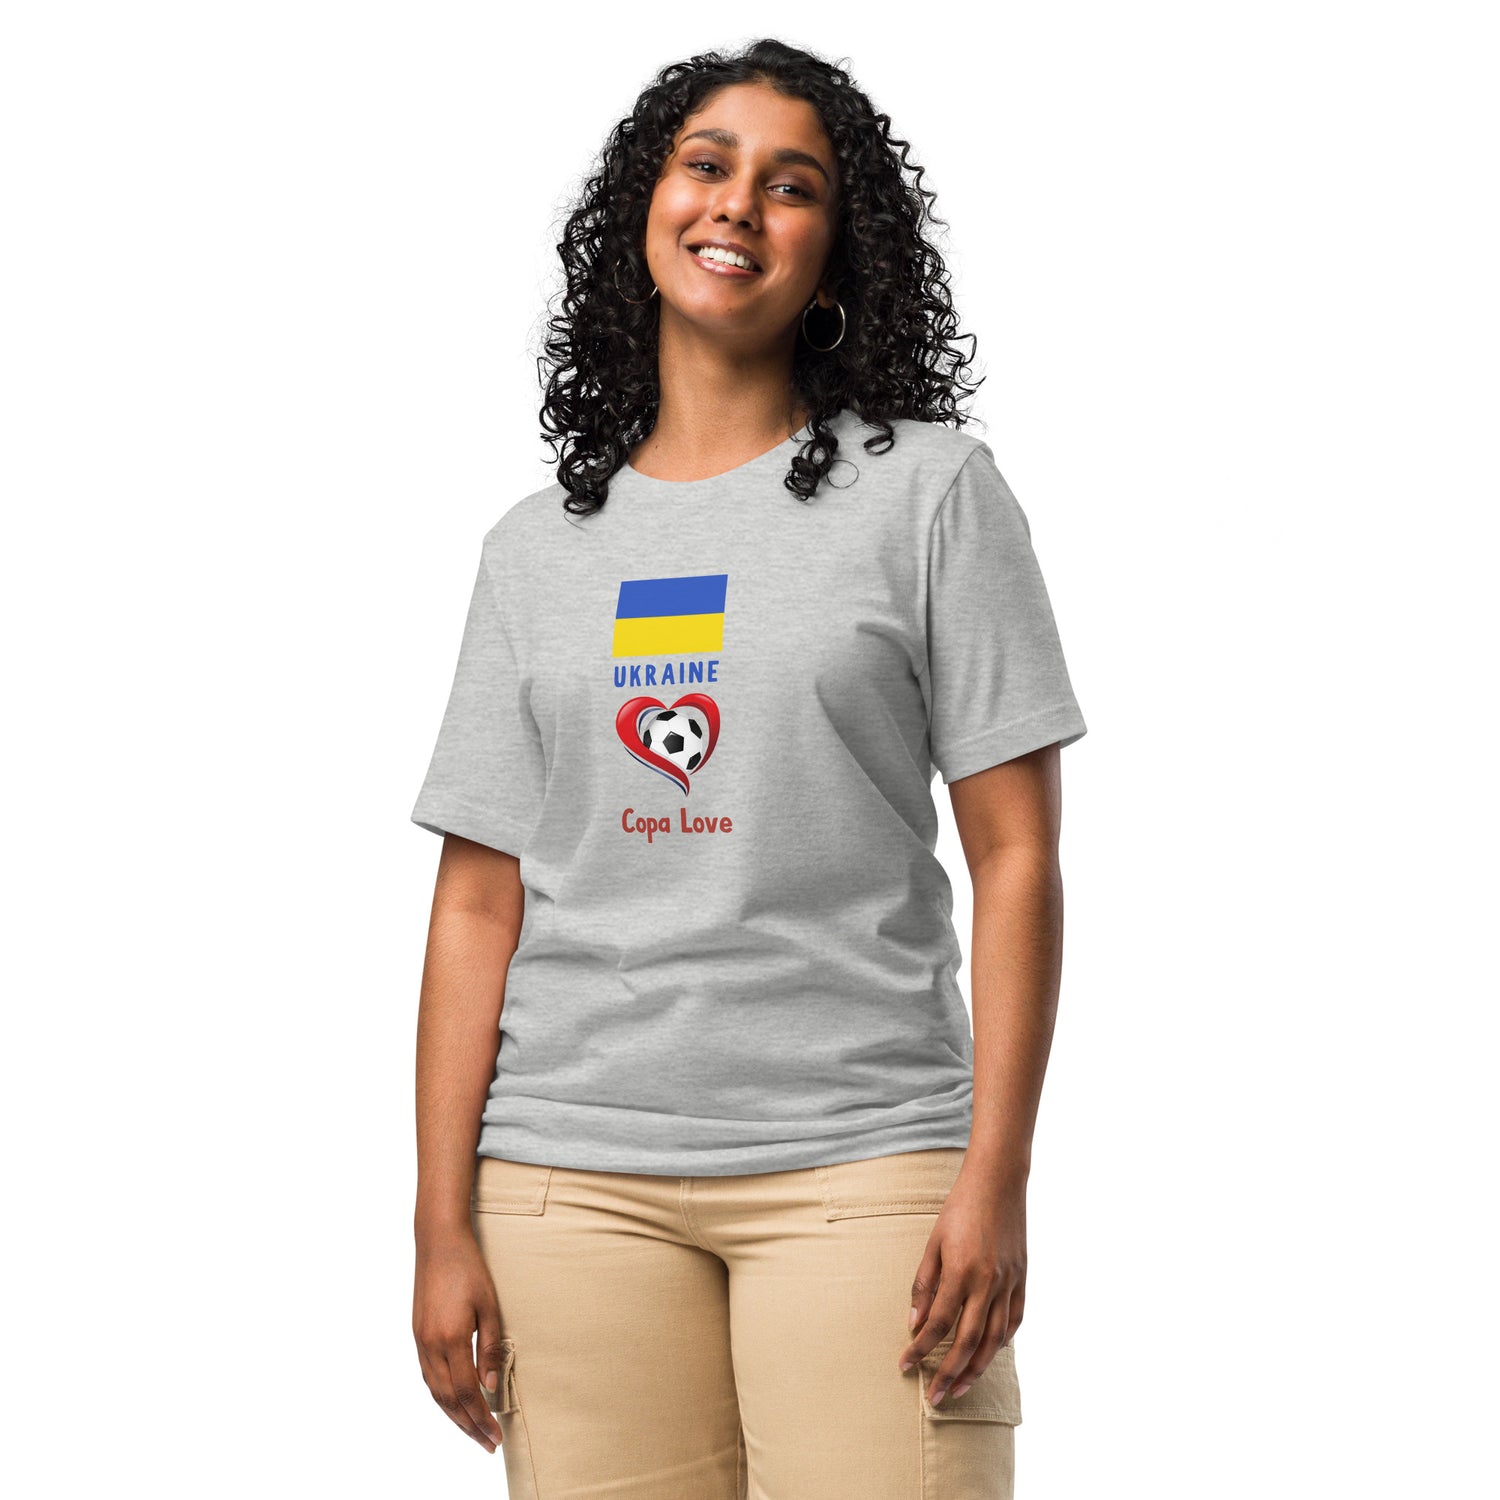 UKRAINE - Copa Love Unisex t-shirt